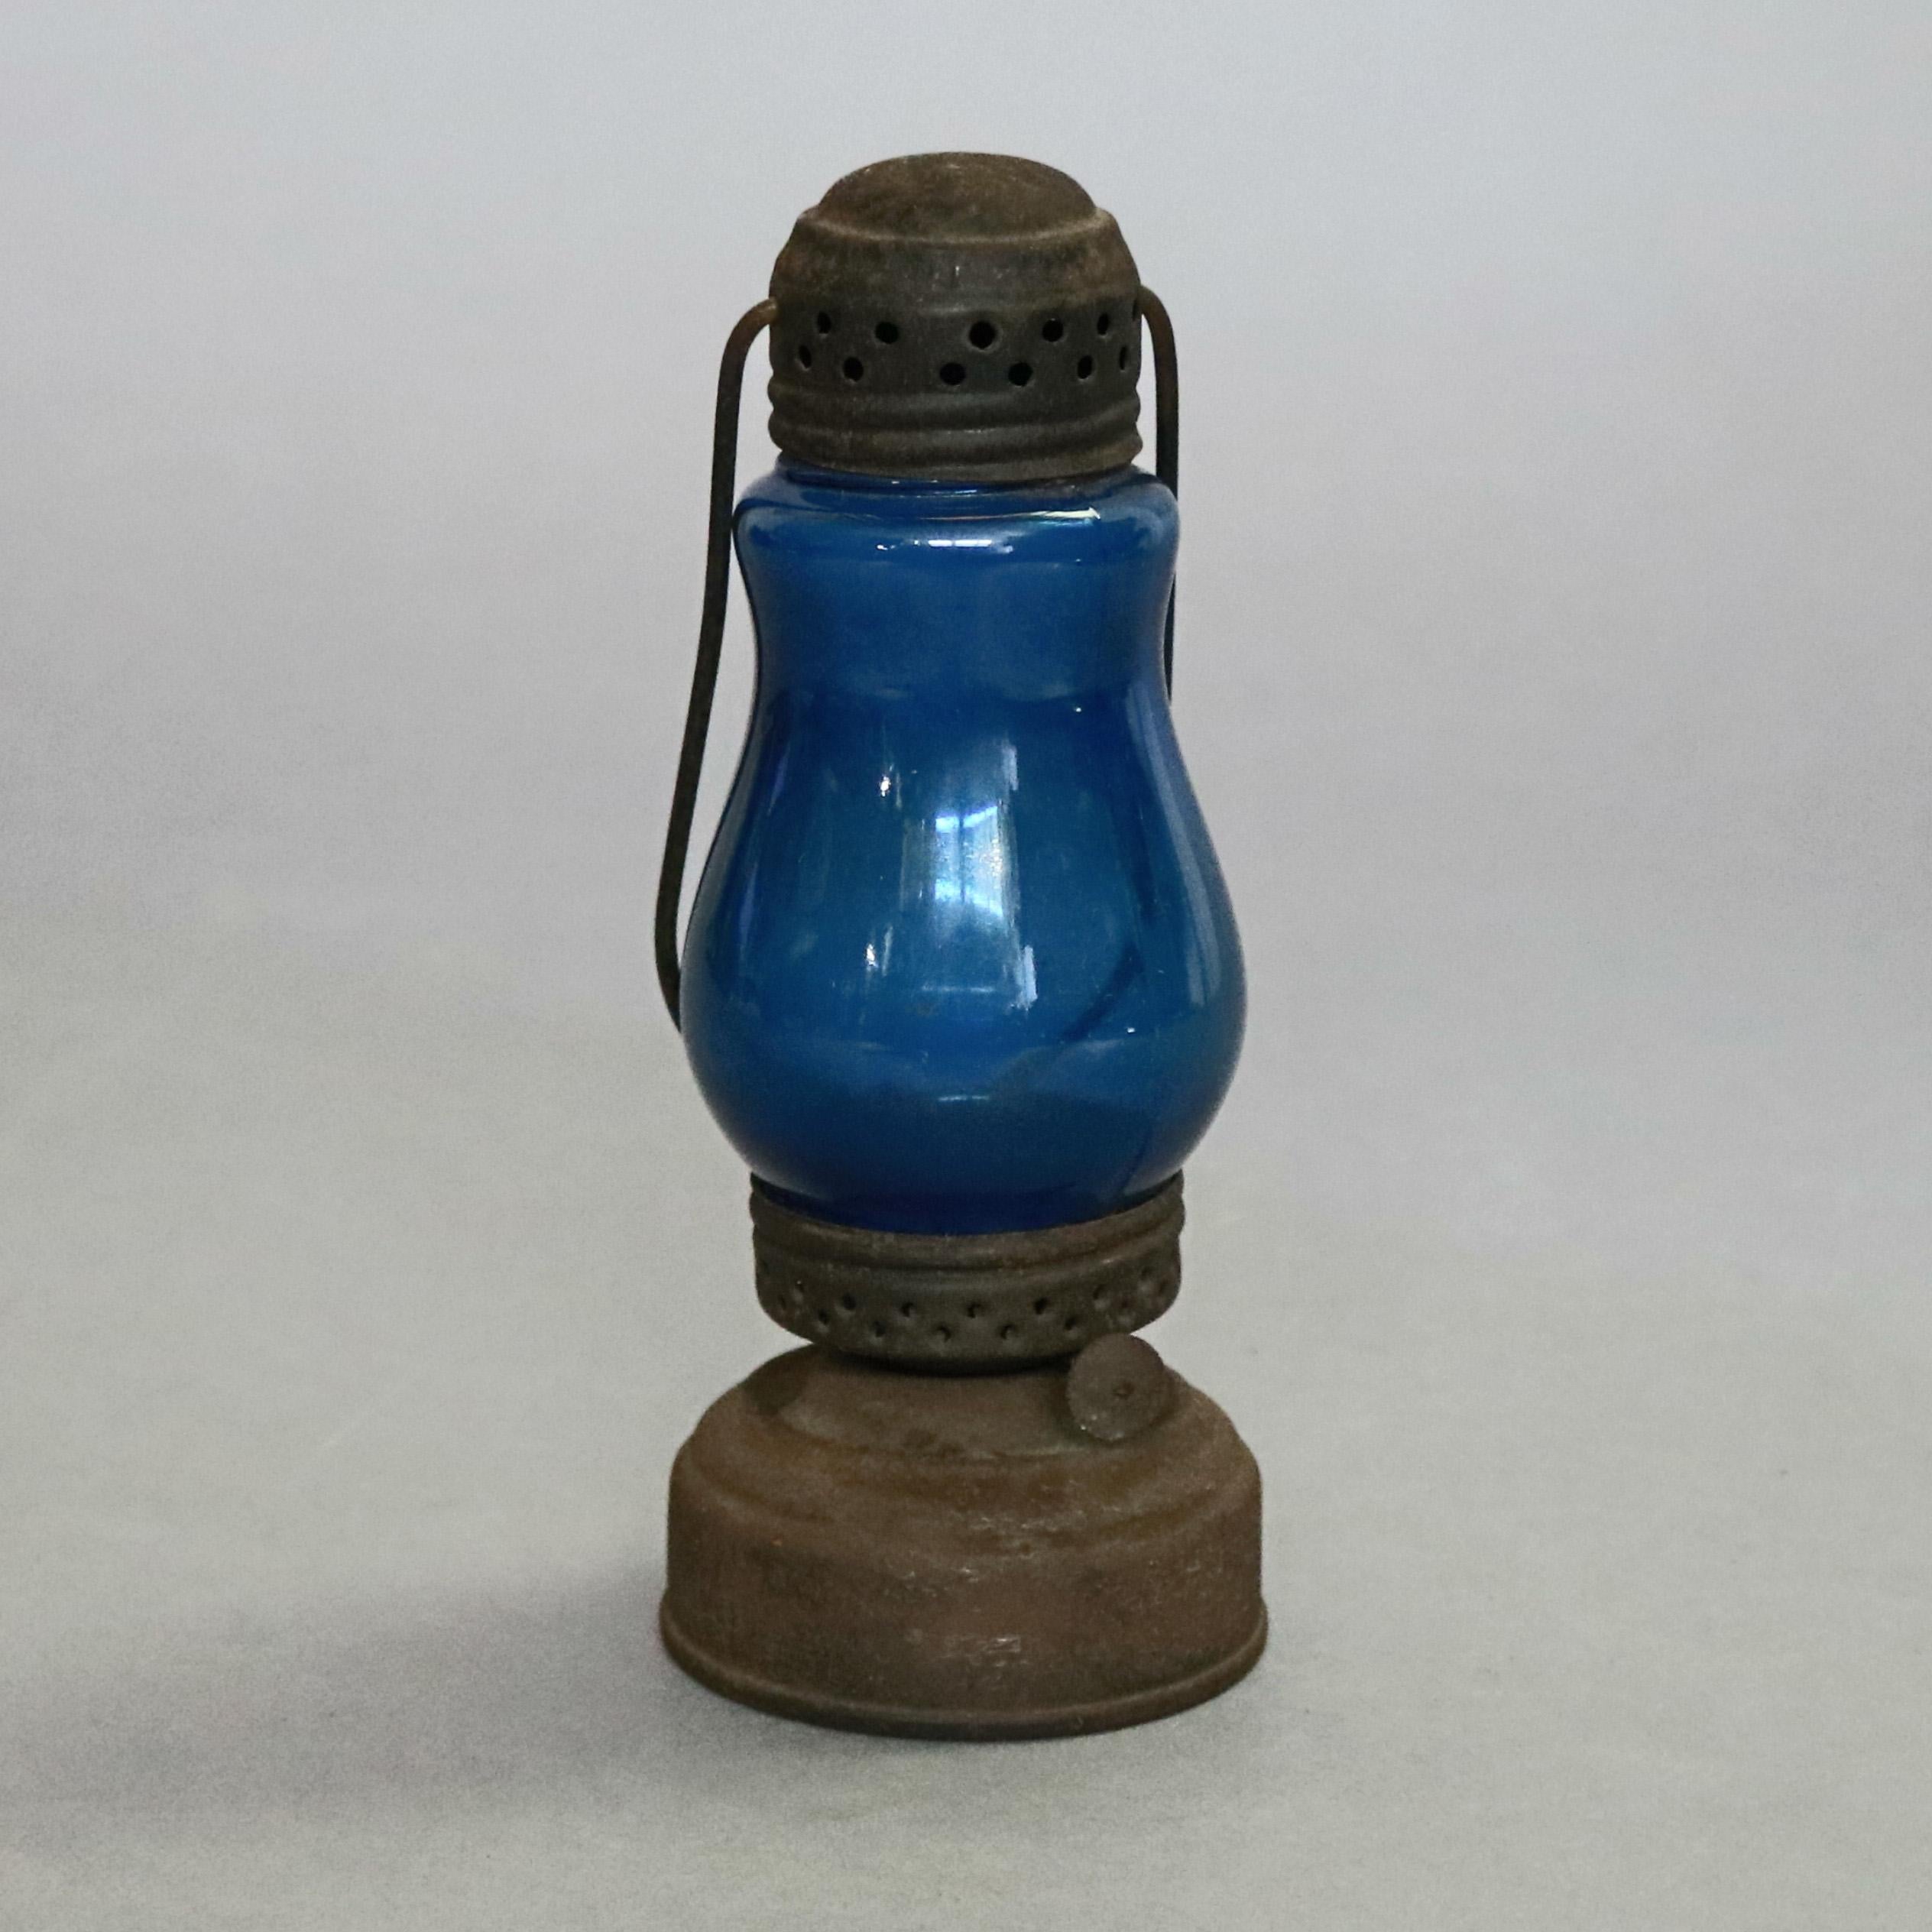 American Antique Skater's Lantern with Blue Glass Globe, circa 1870